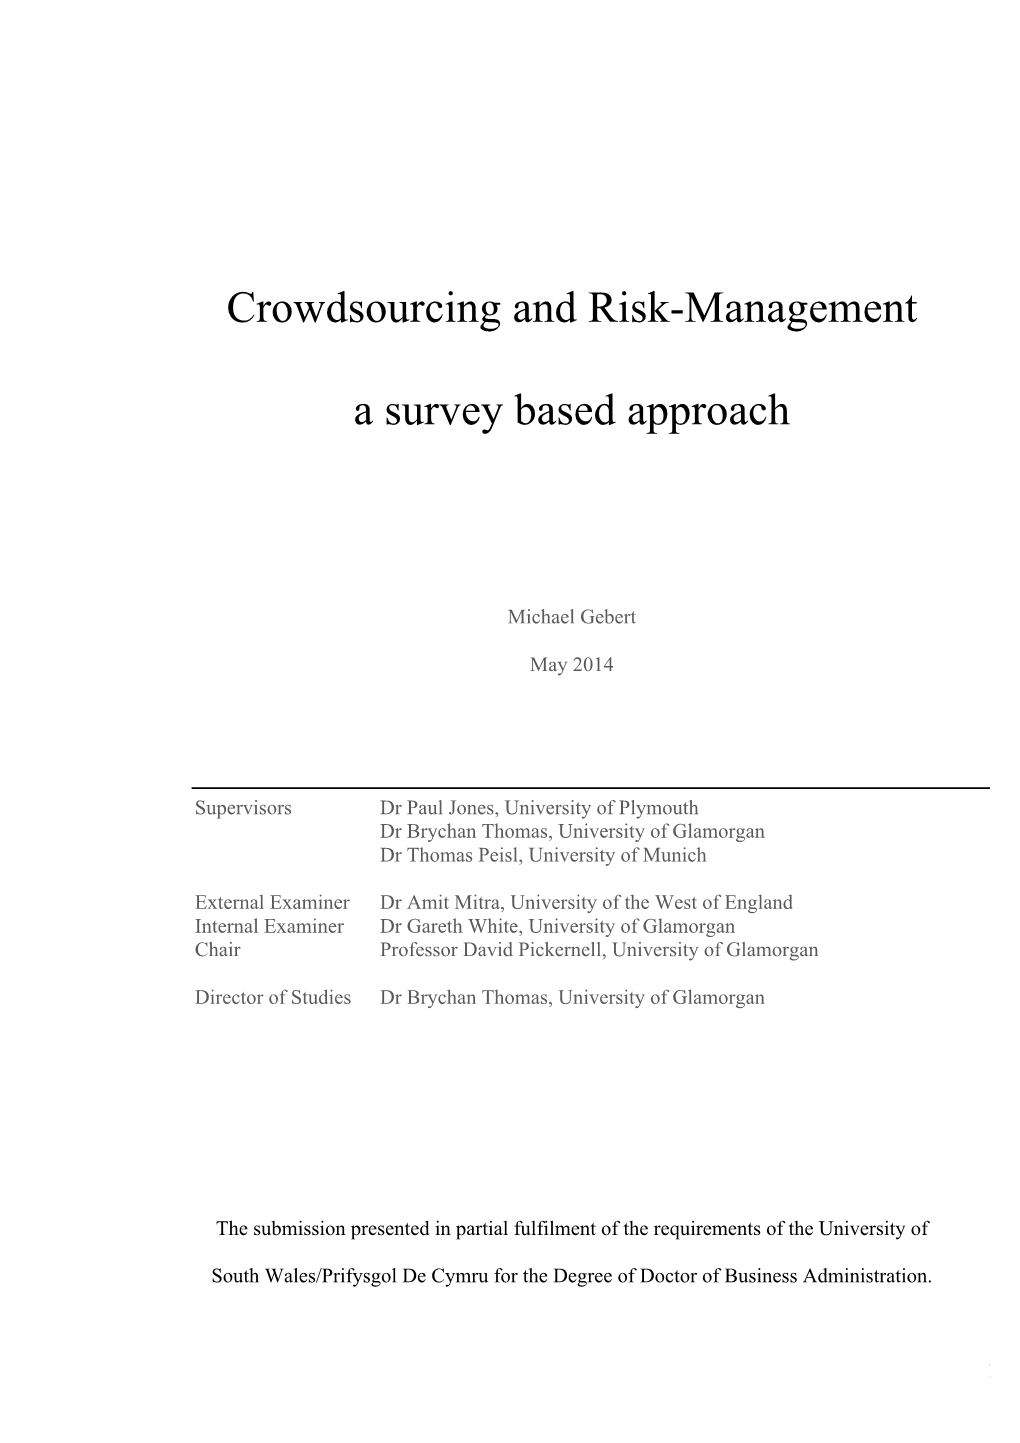 Crowdsourcing and Risk-Management a Survey Based